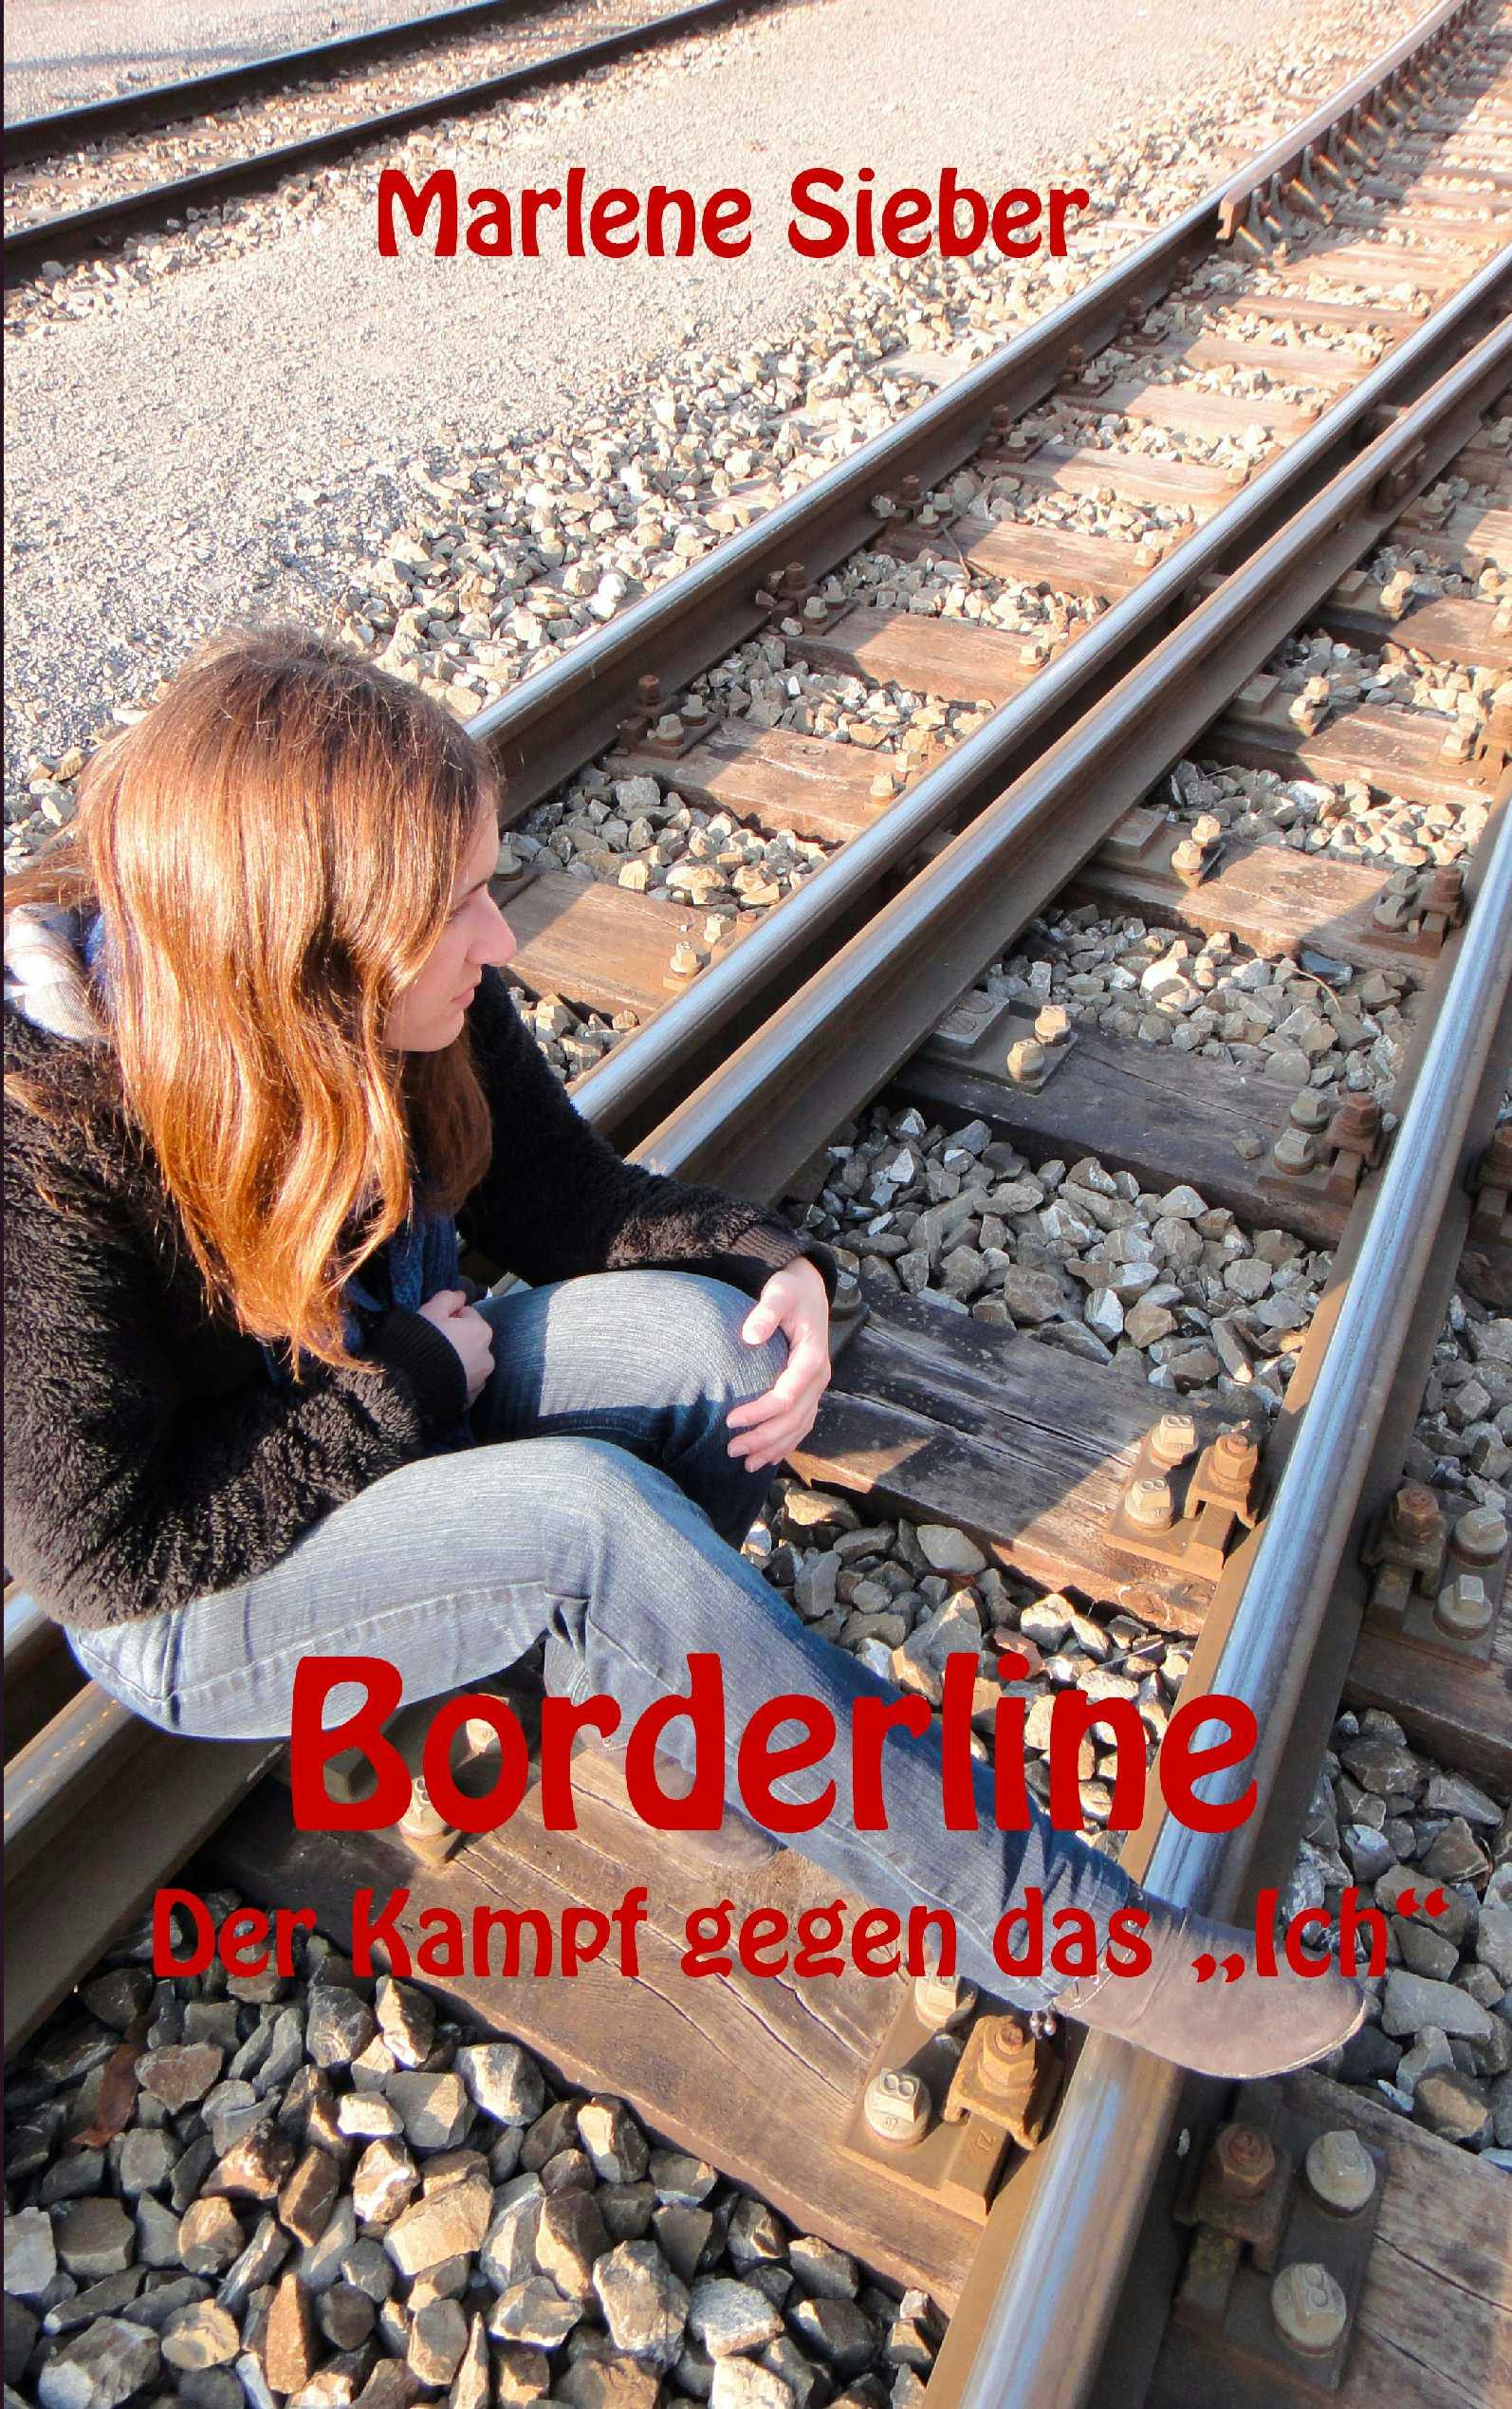 Borderline - undefined